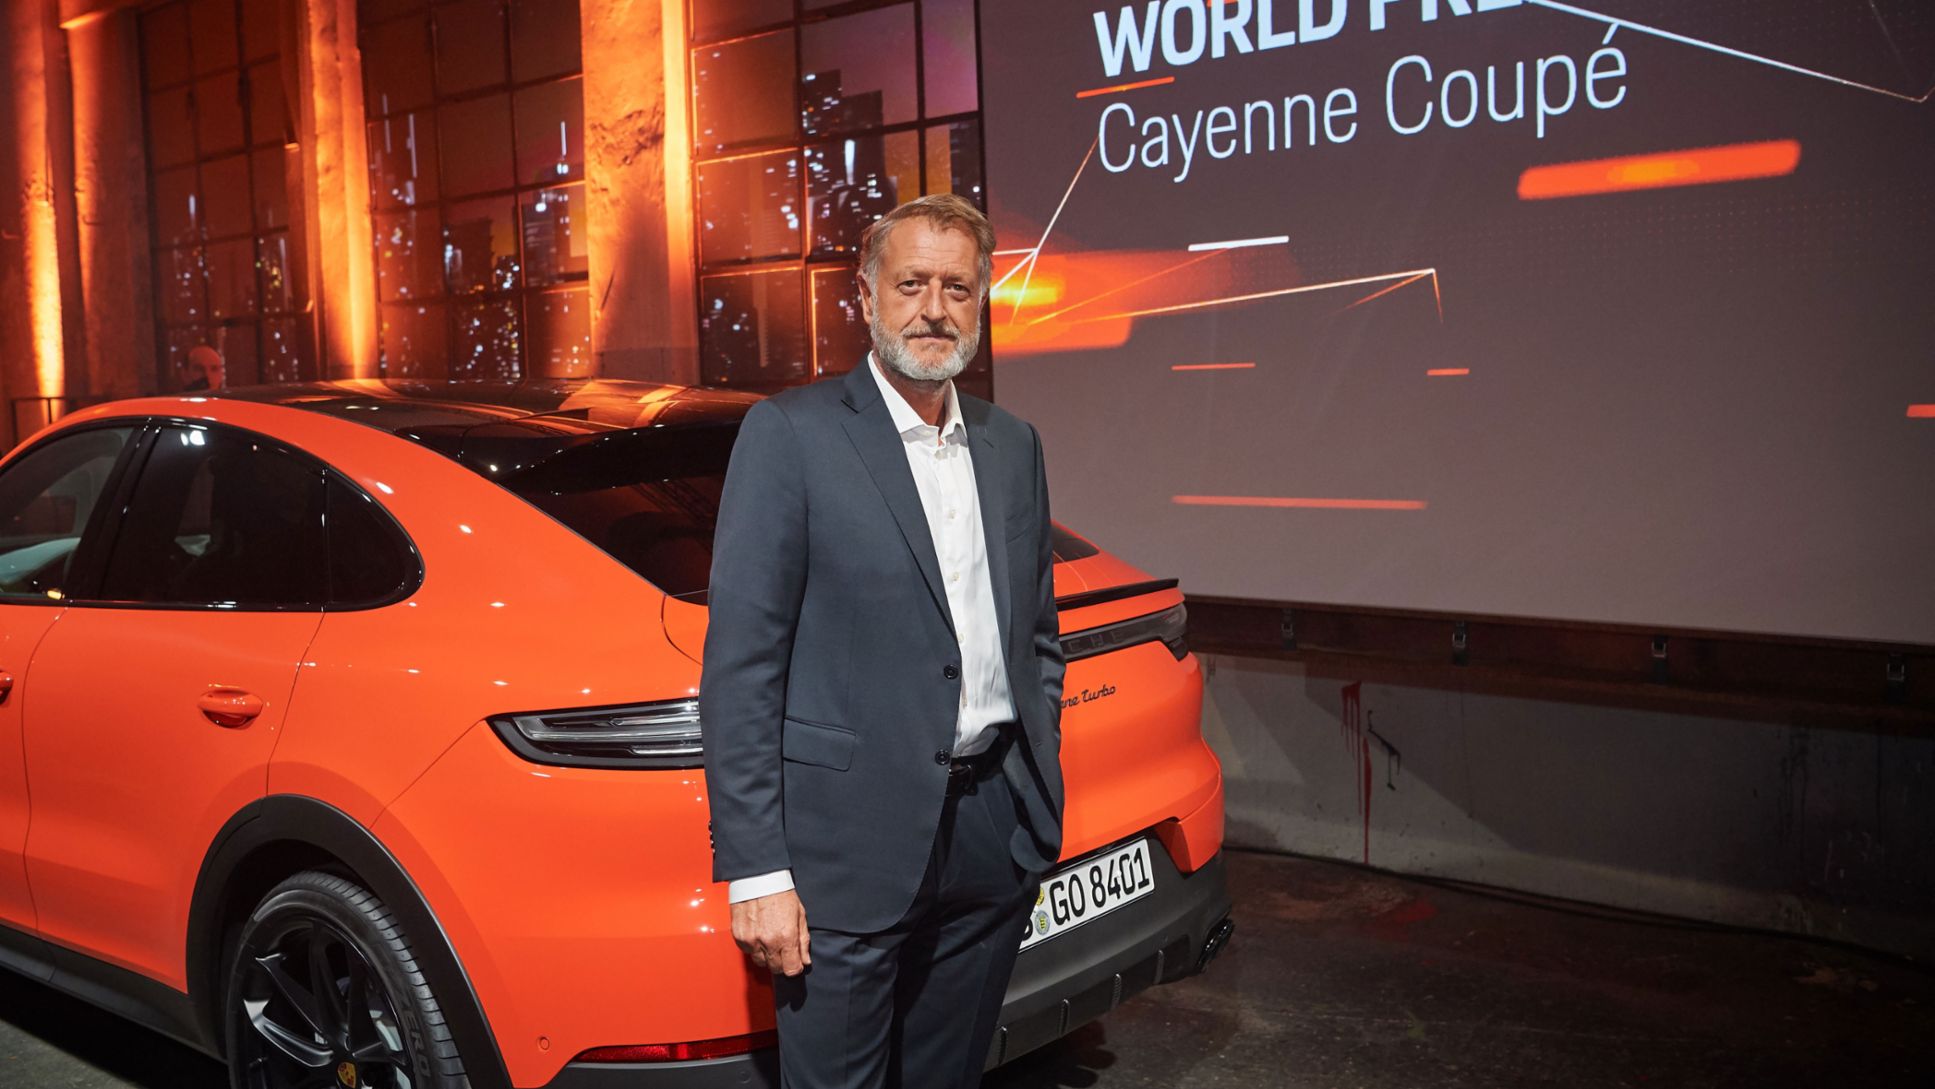 Detlev von Platen, Member of the Executive Board, Sales and Marketing, World premiere of the new Porsche Cayenne Coupé, Stuttgart, 2019, Porsche AG